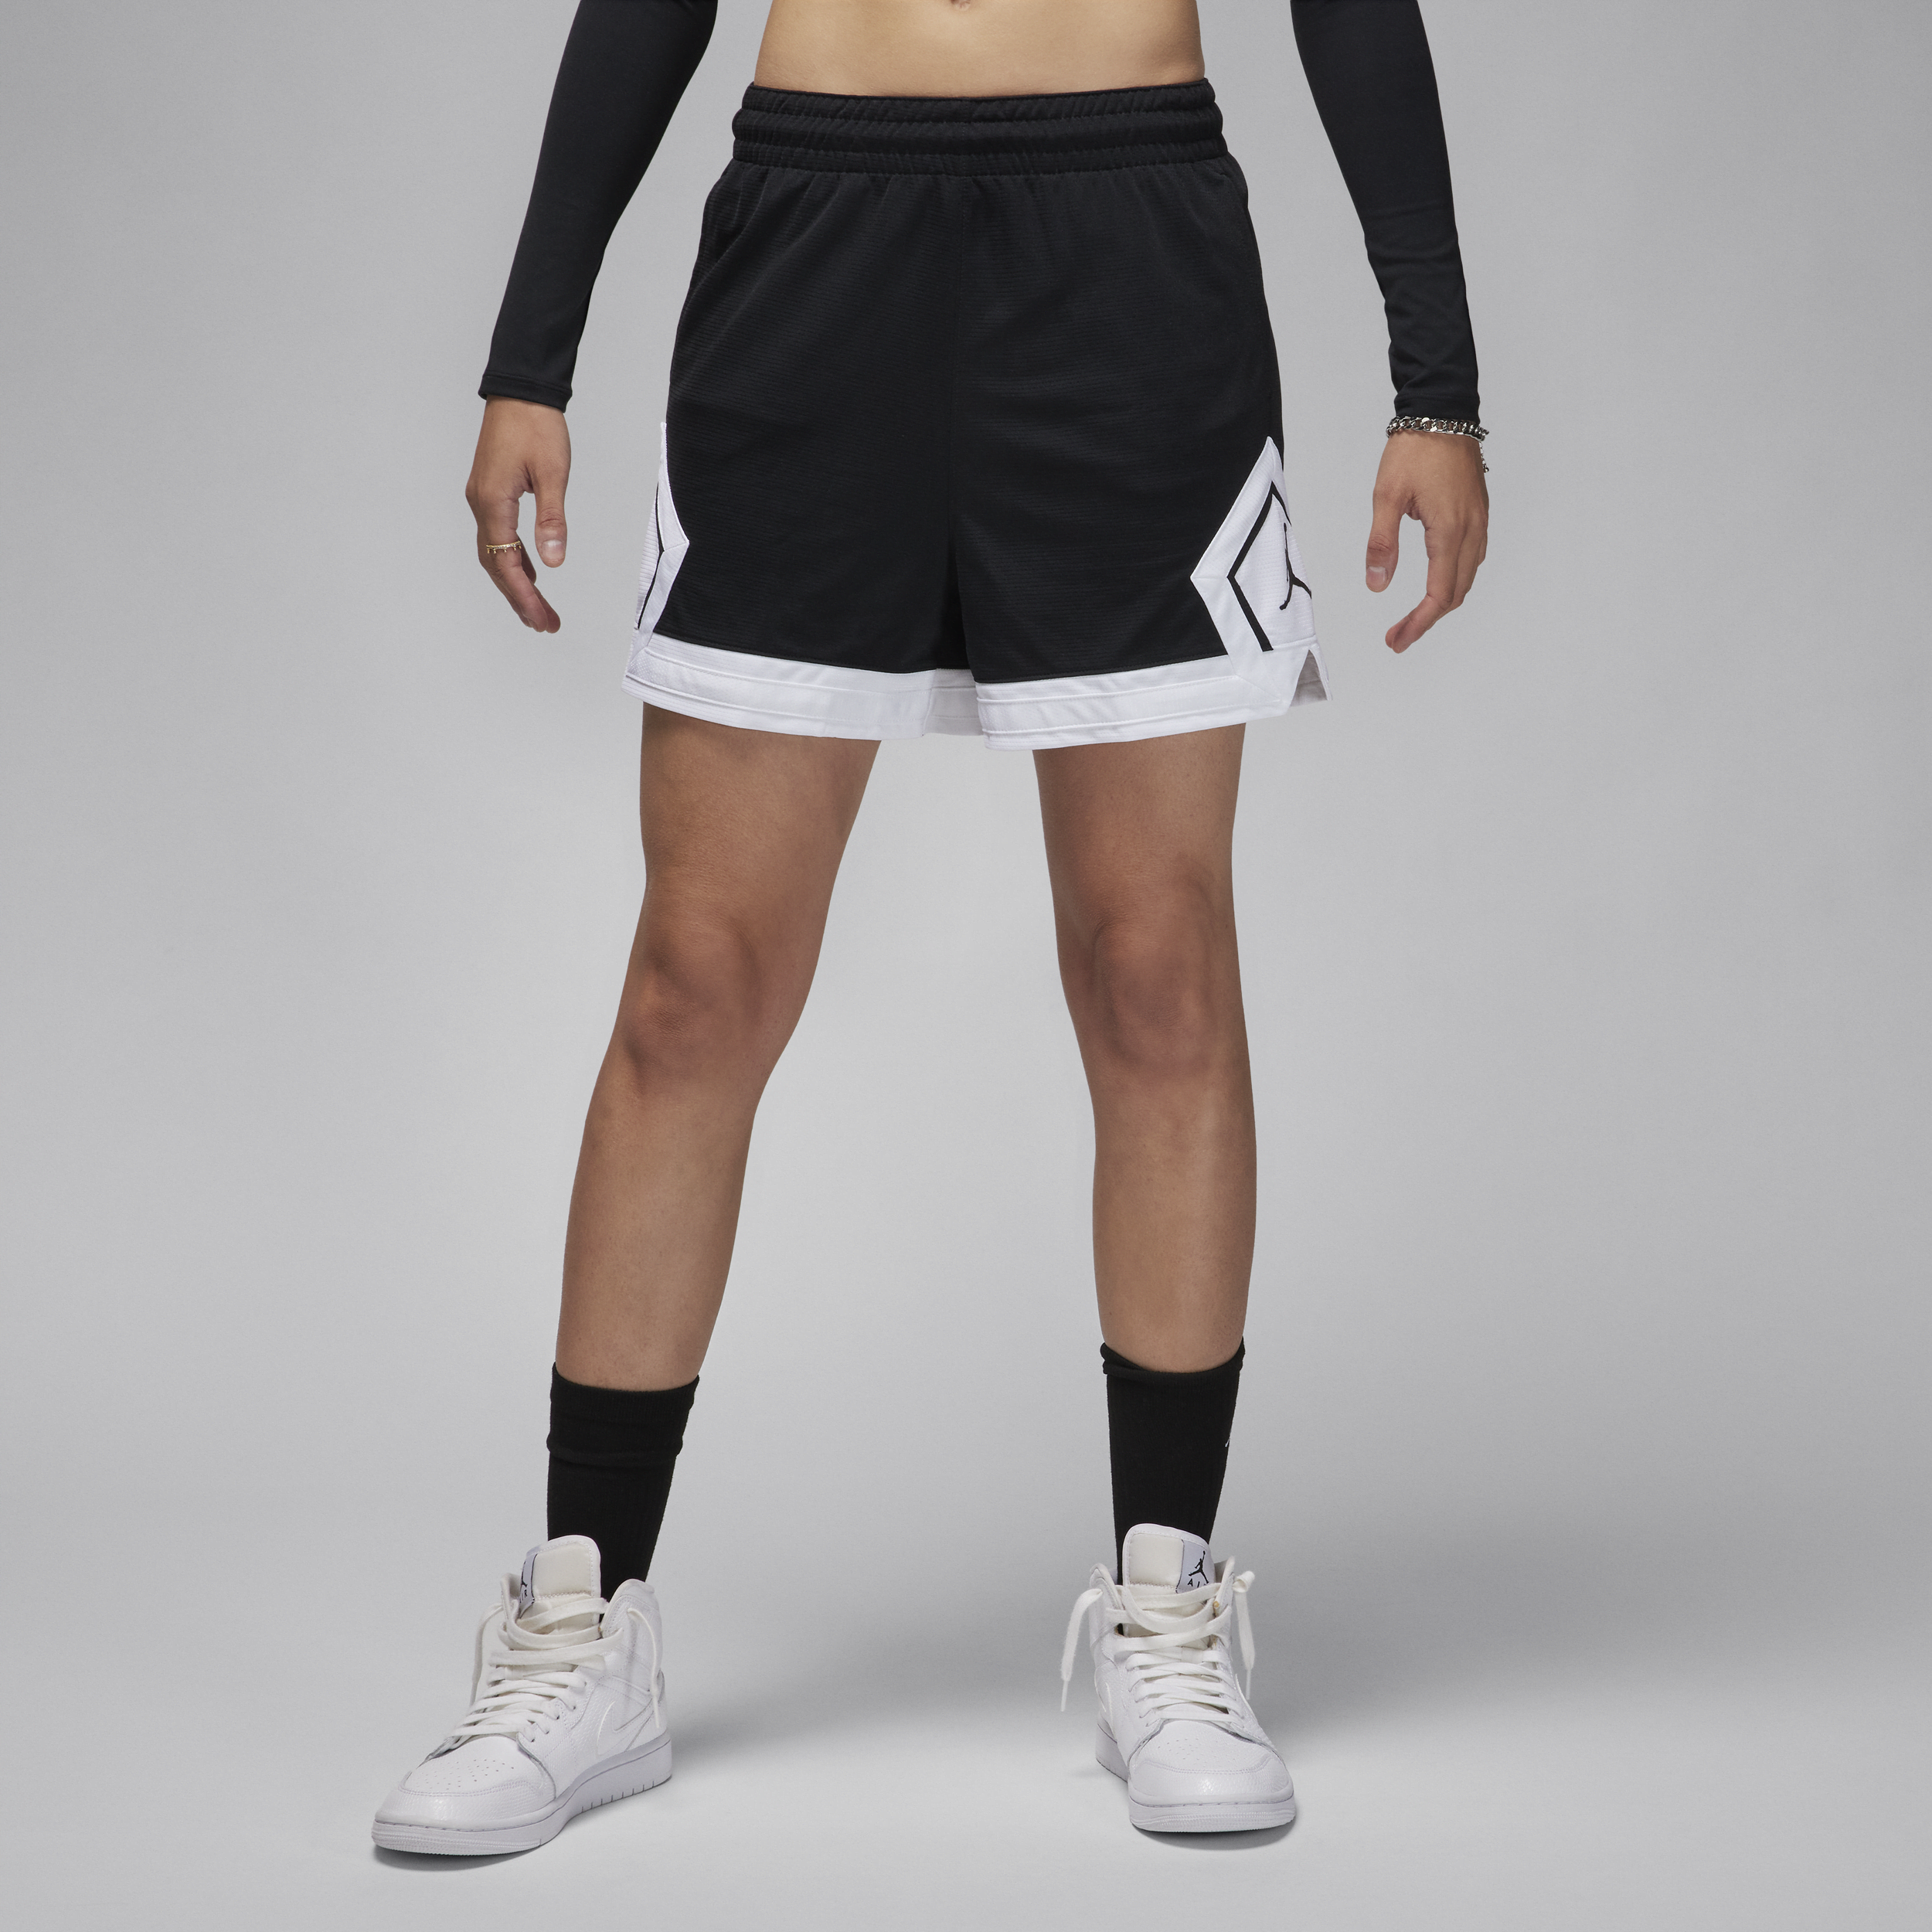 Jordan Sport Diamond-shorts (10 cm) til kvinder - sort